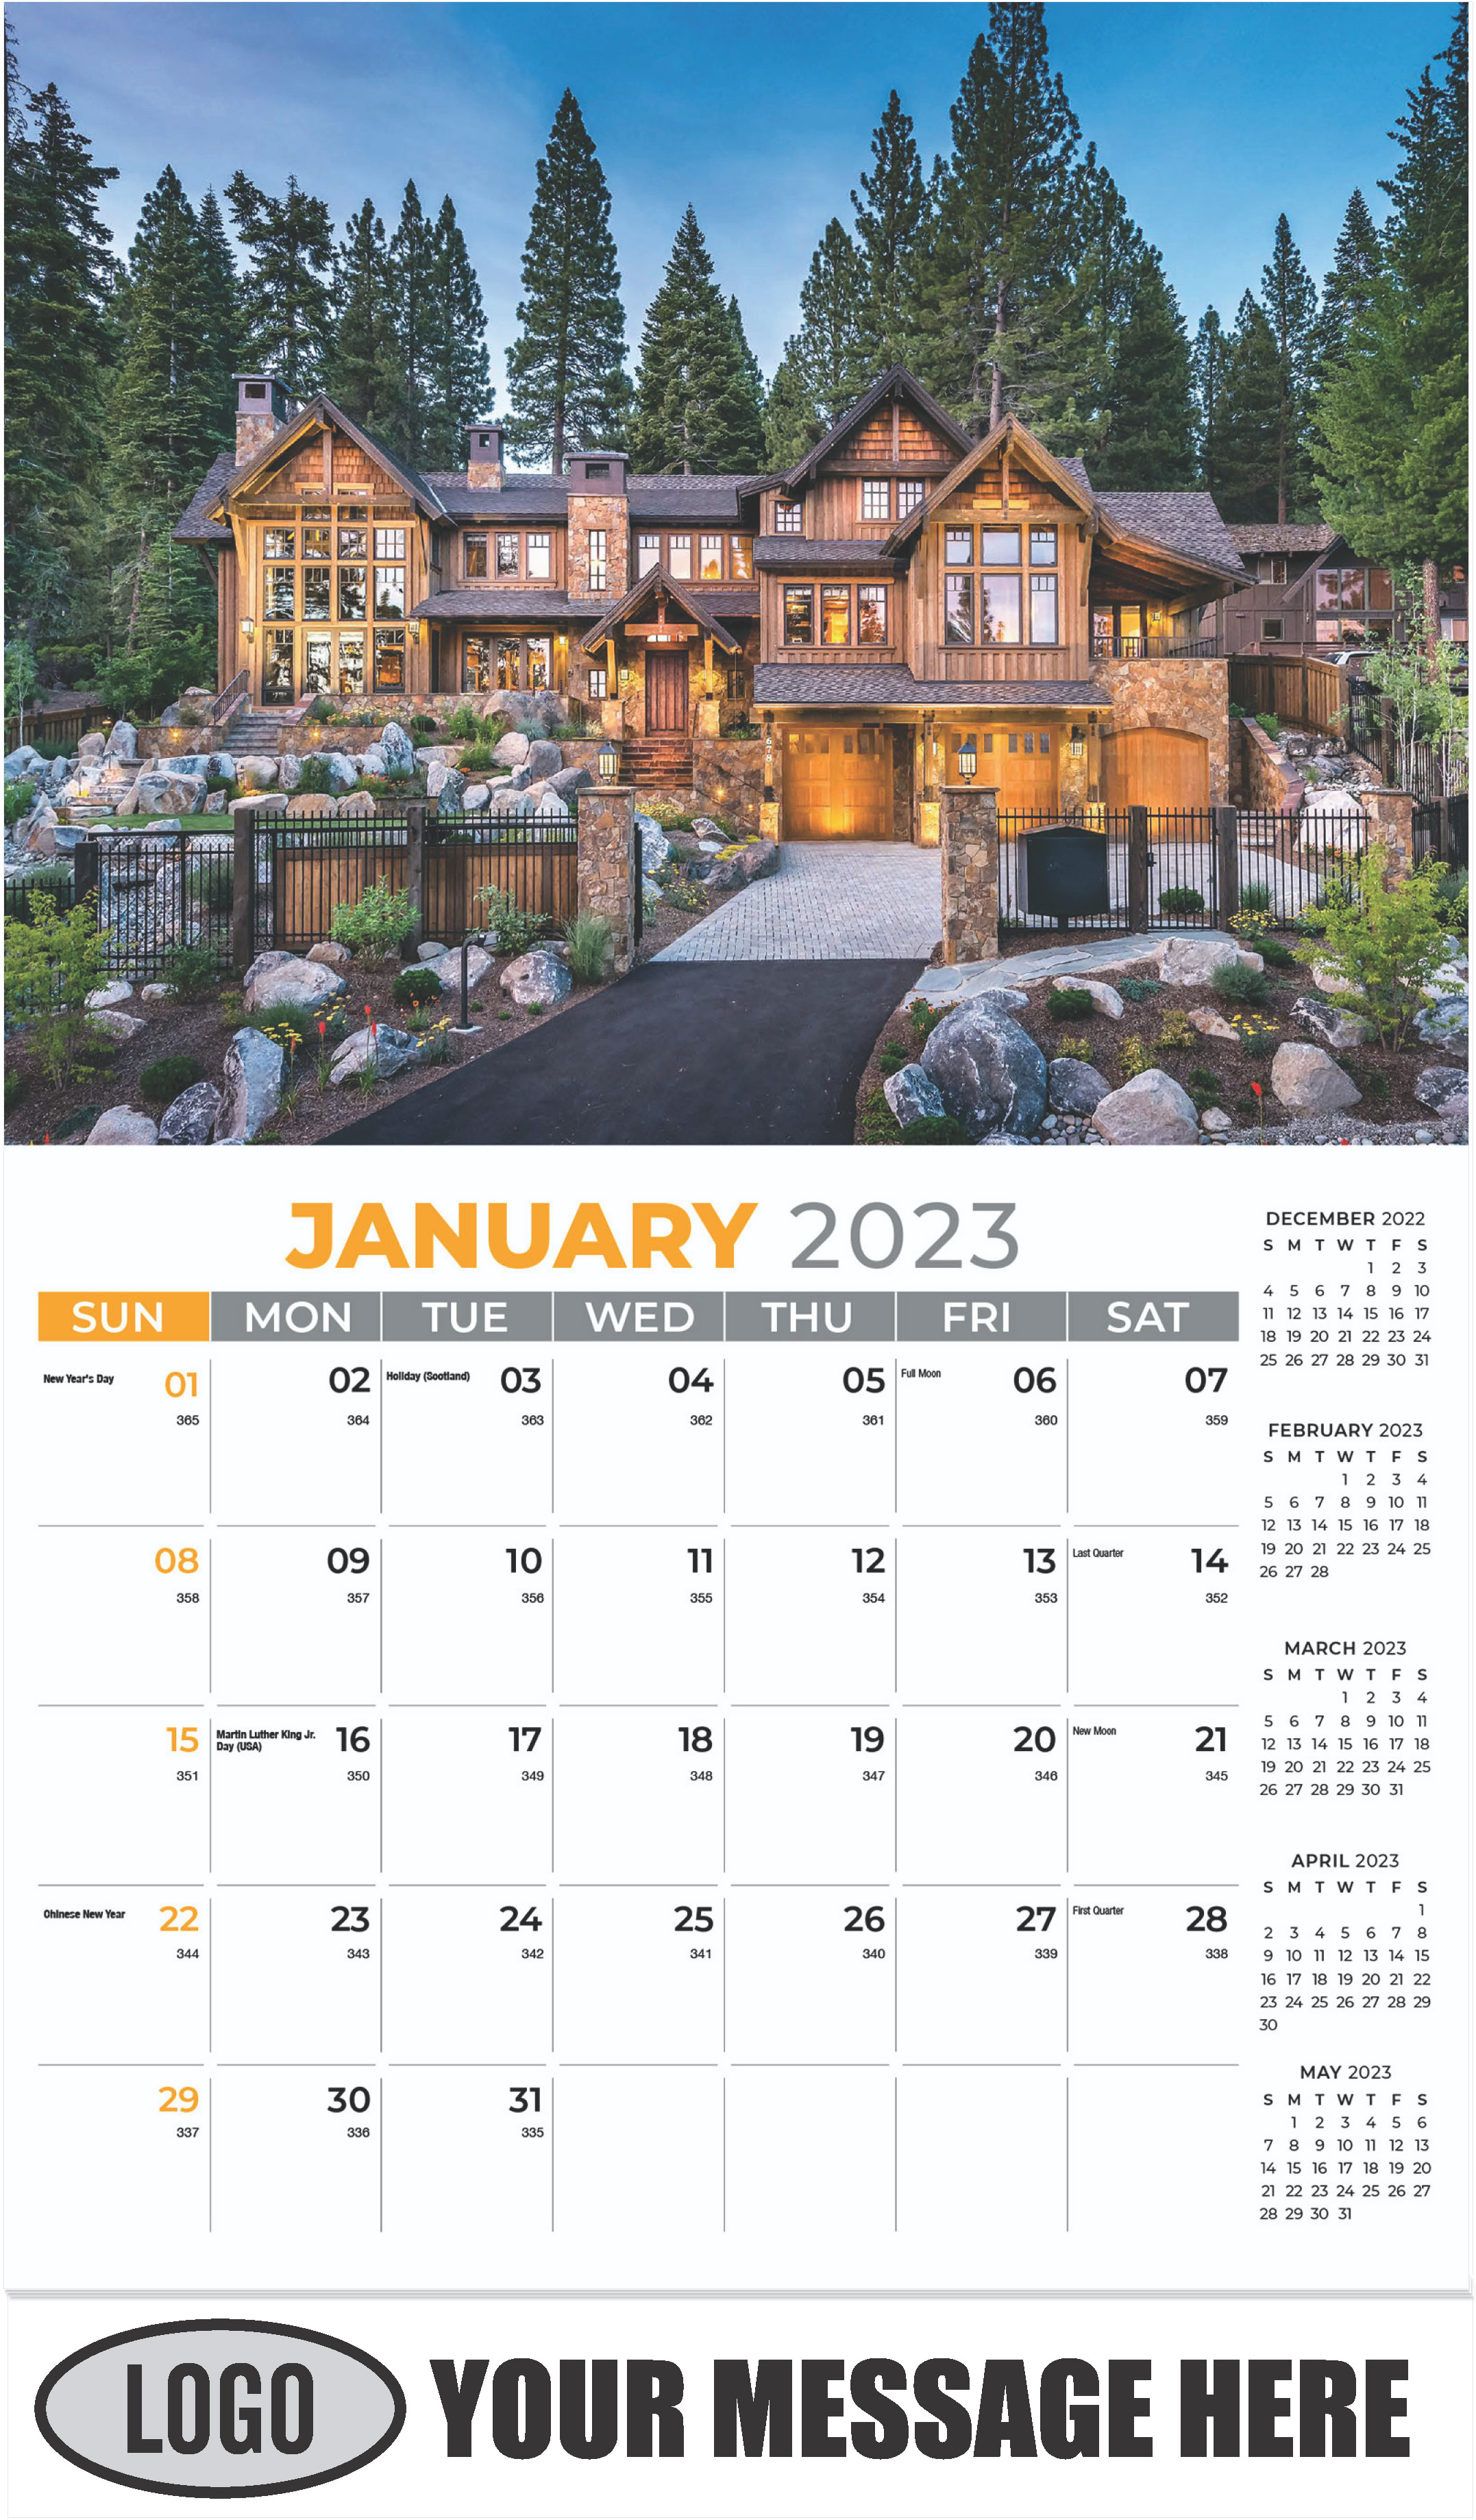 2023 Advertising Calendar Custom Homes low as 65¢